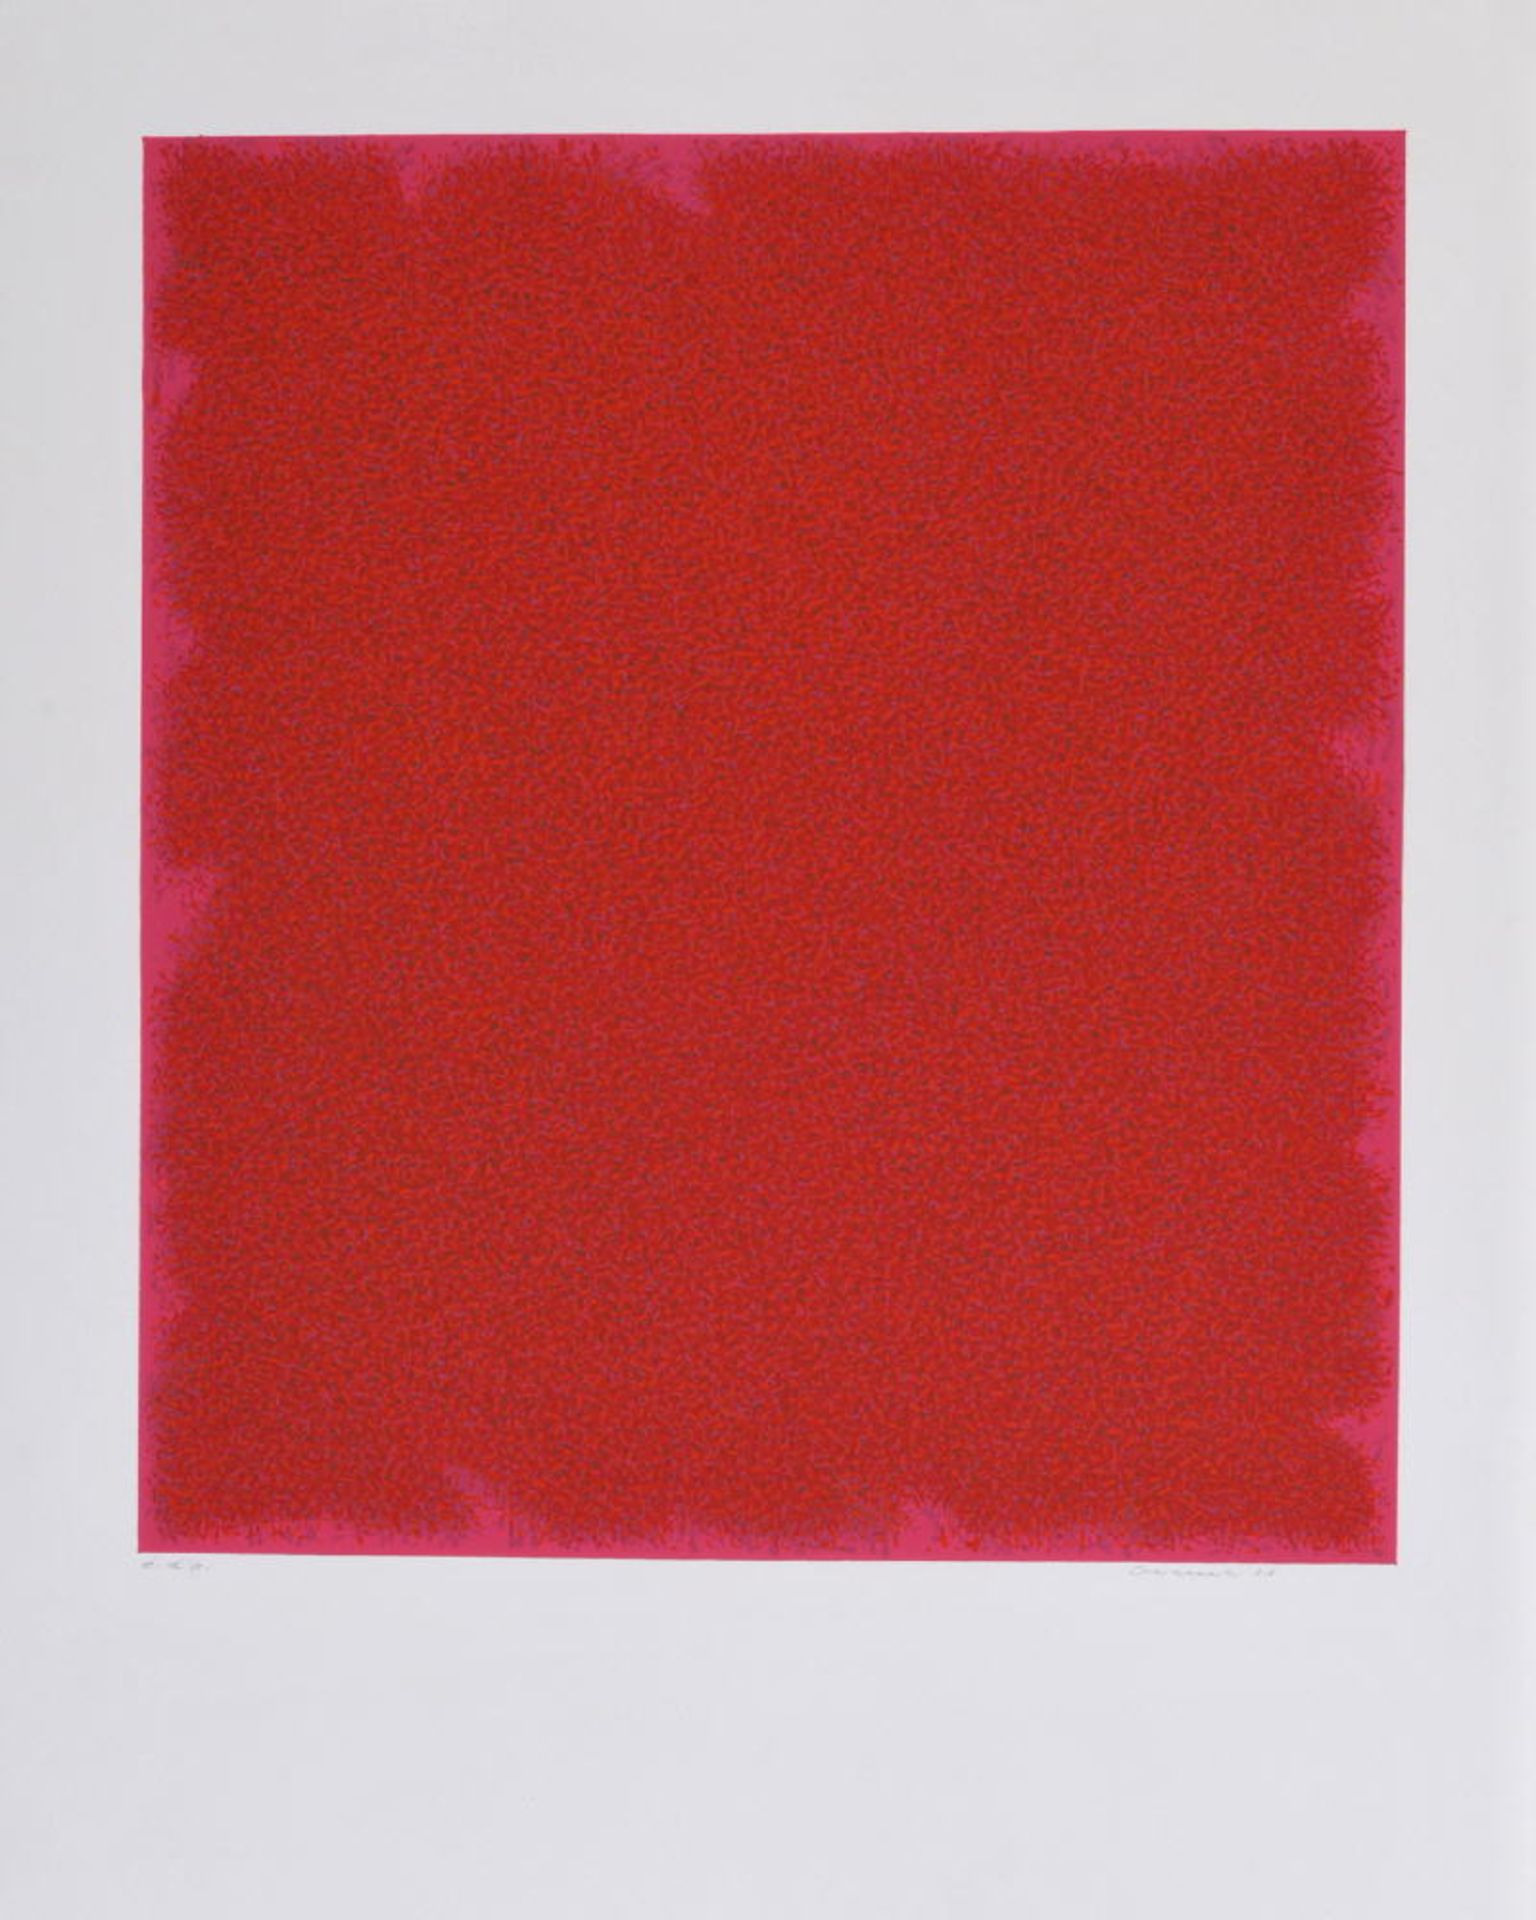 Berner, Bernd, 1930 Hamburg - 2002Farblithographie, 40 x 45 cm, " Komposition in Rot ", handsign.,